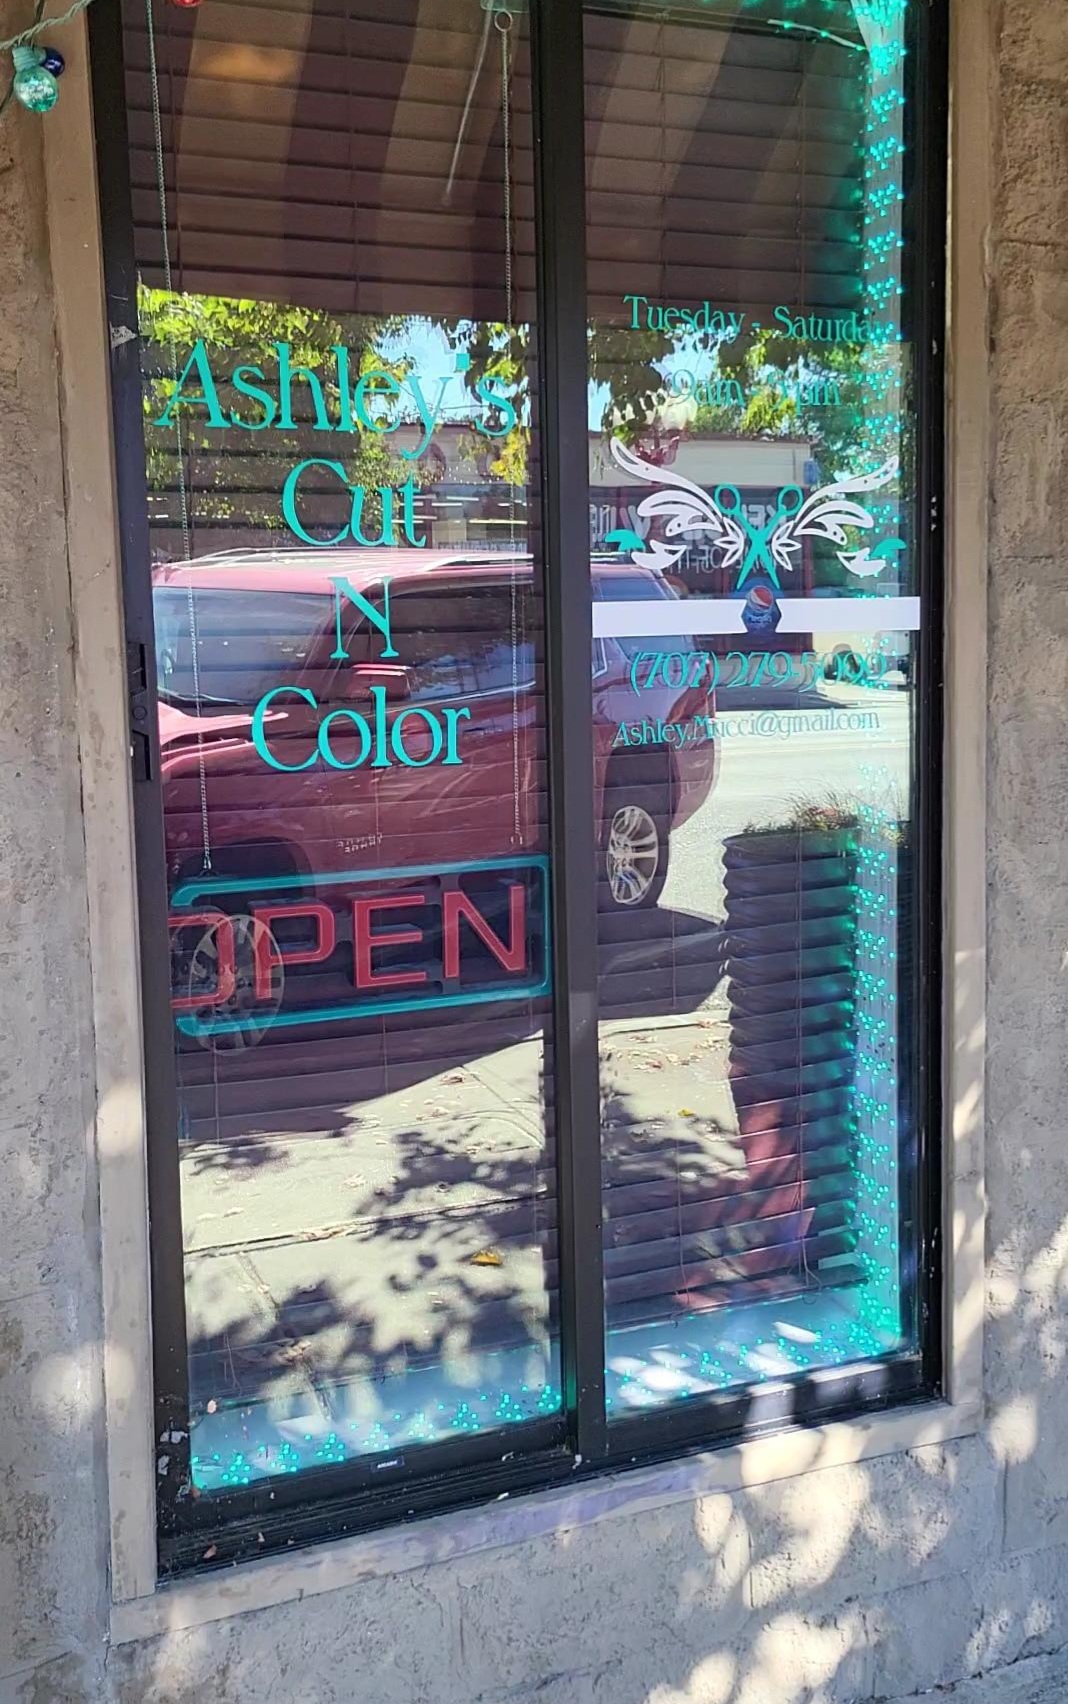 Ashley's Cut & Color 3980 Main St, Kelseyville California 95451